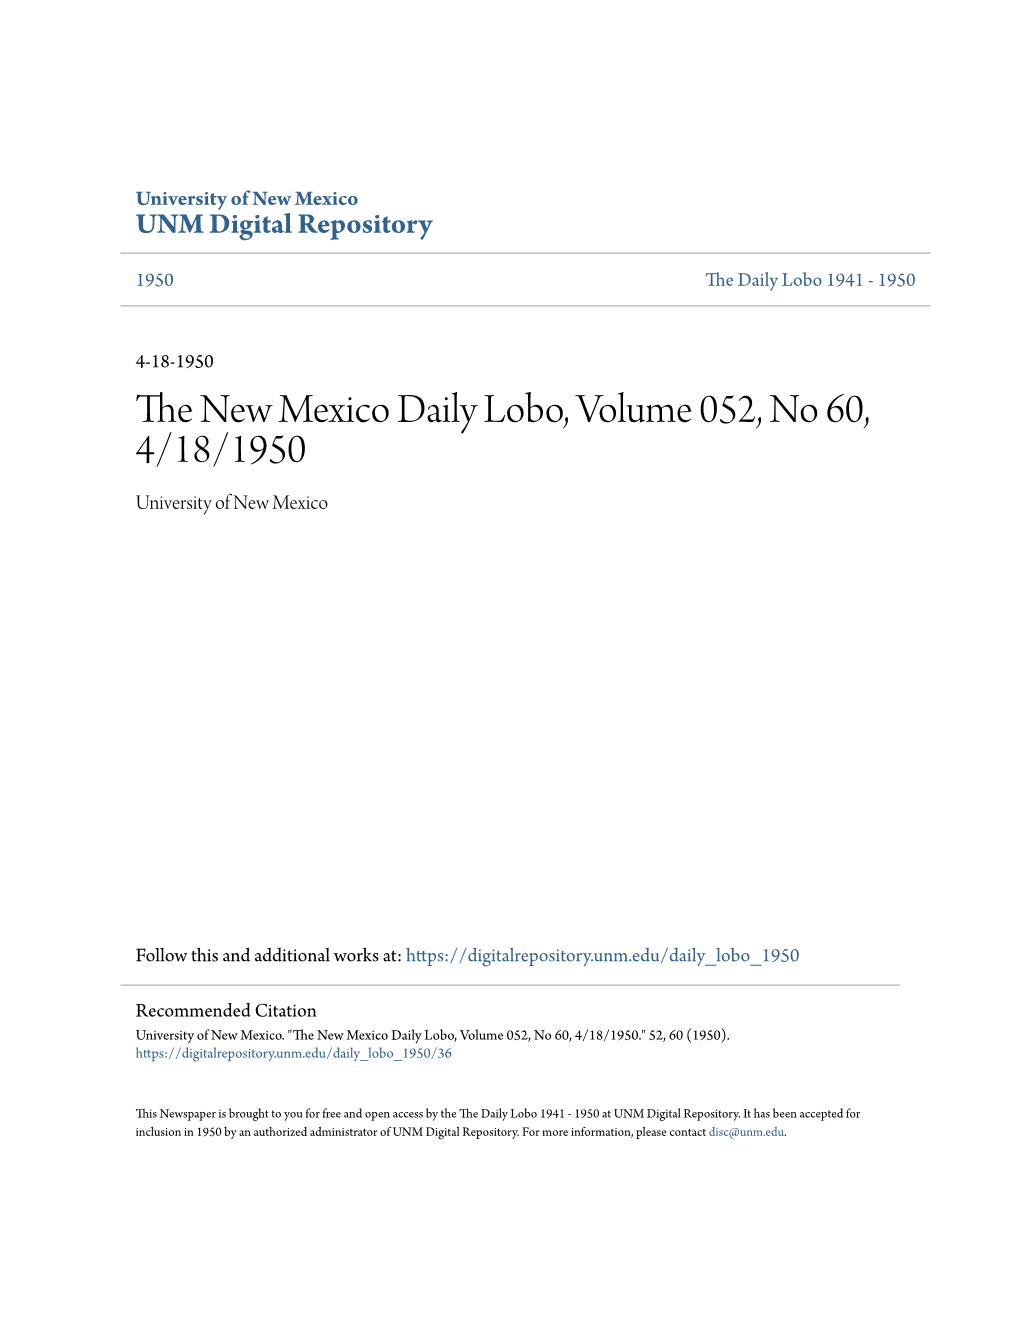 The New Mexico Daily Lobo, Volume 052, No 60, 4/18/1950